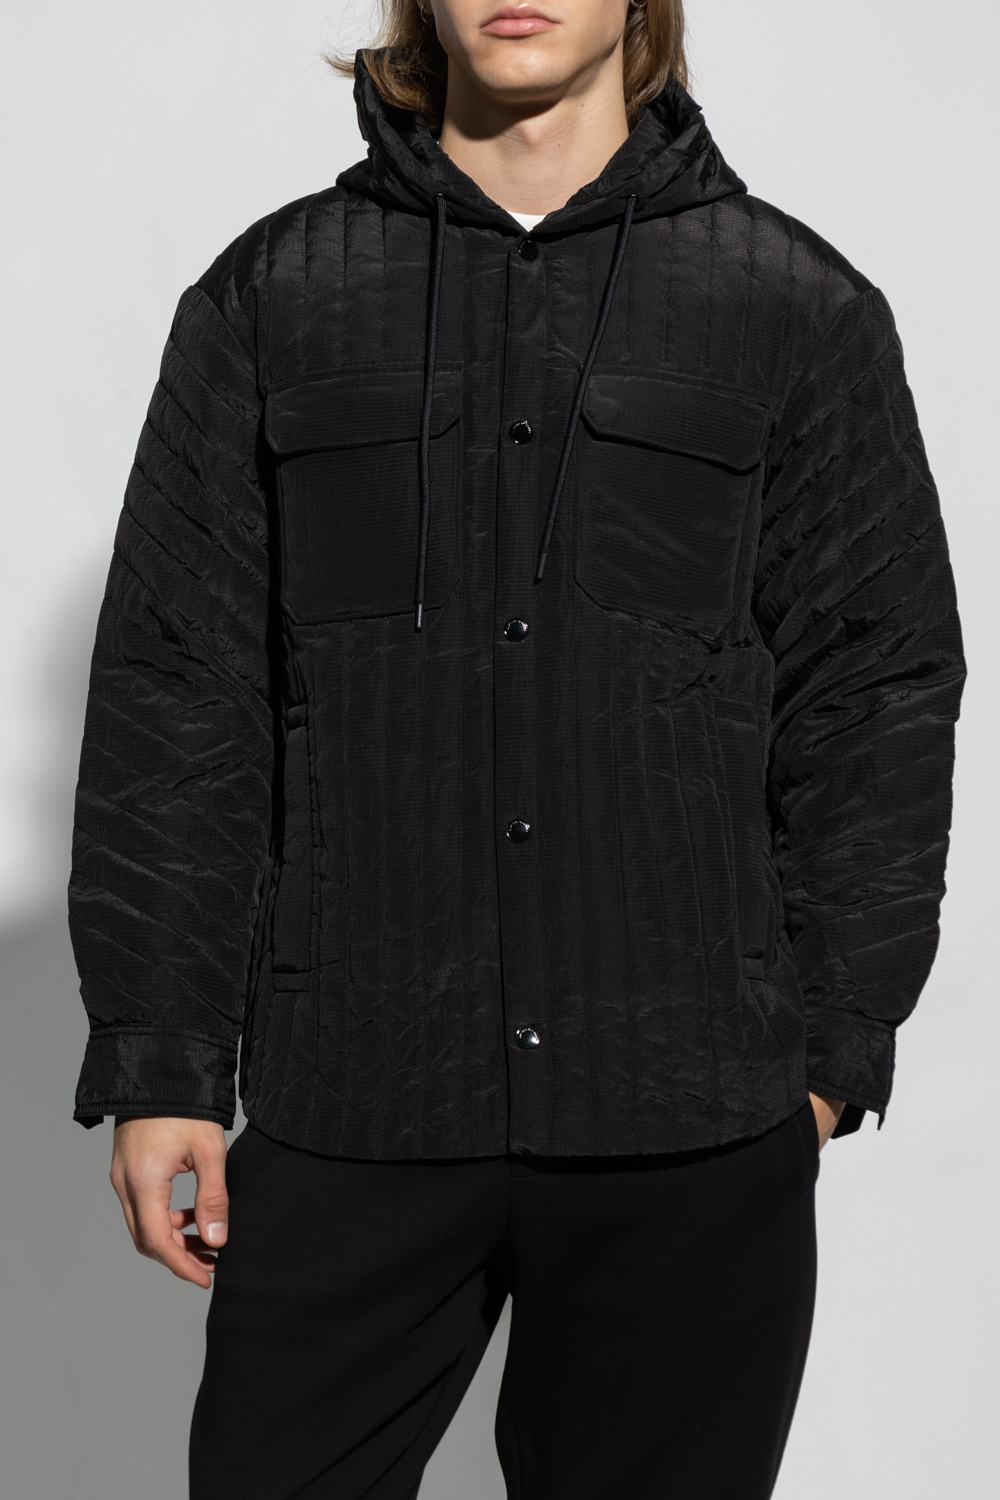 Emporio Armani ‘Sustainable’ collection jacket